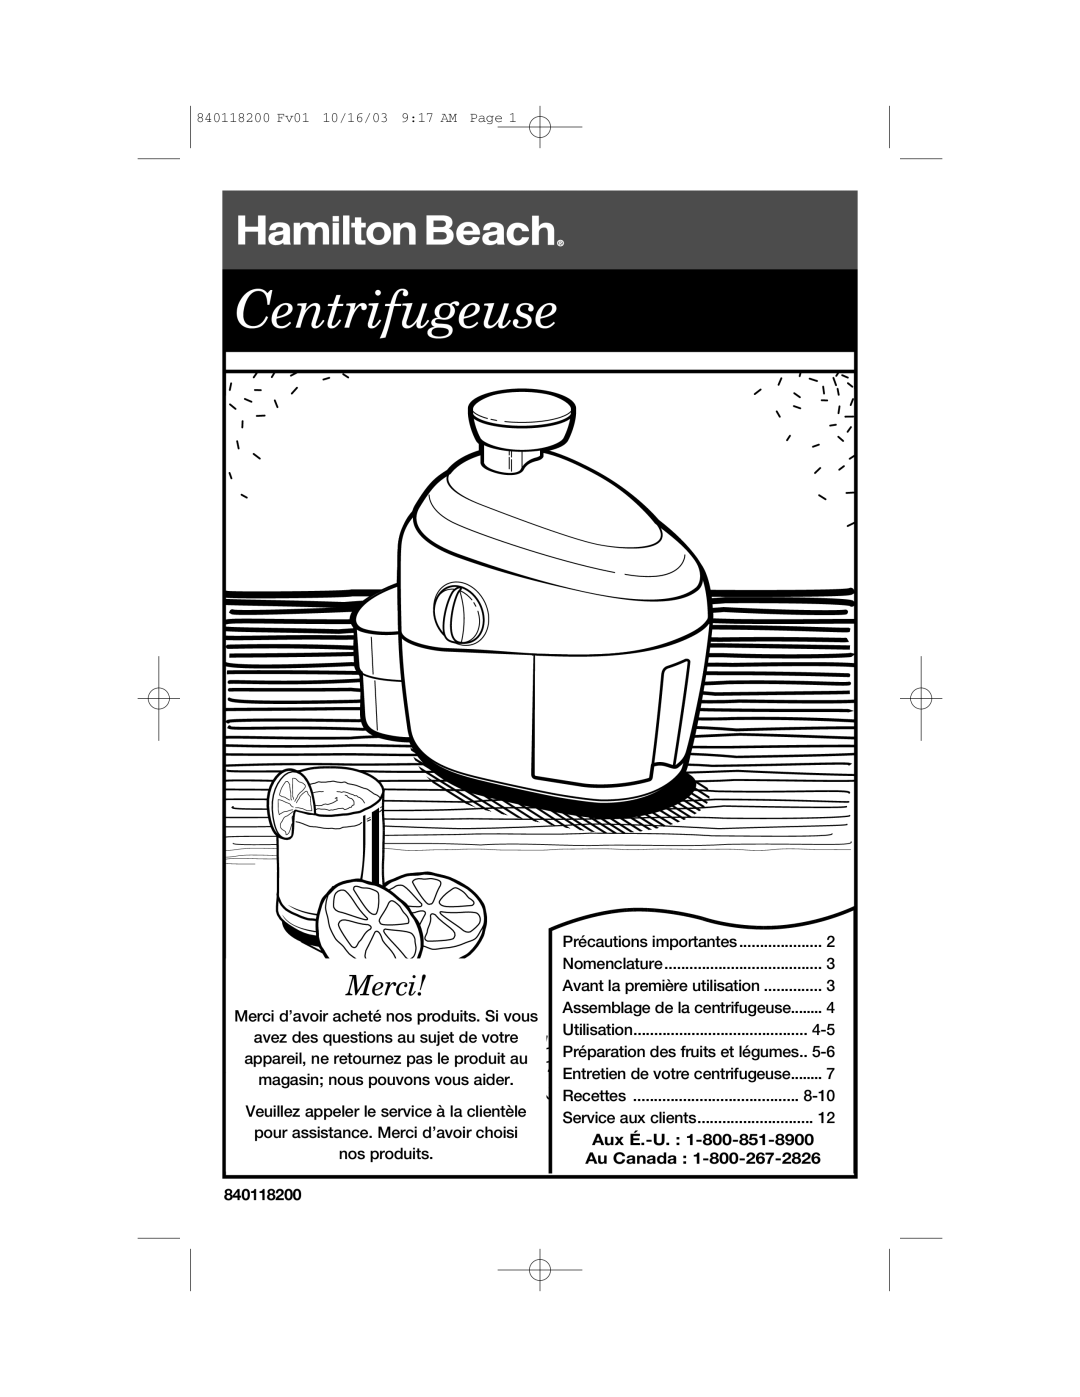 Hamilton Beach 67900 manual Centrifugeuse, Merci, Aux É.-U, Au Canada, 840118200 